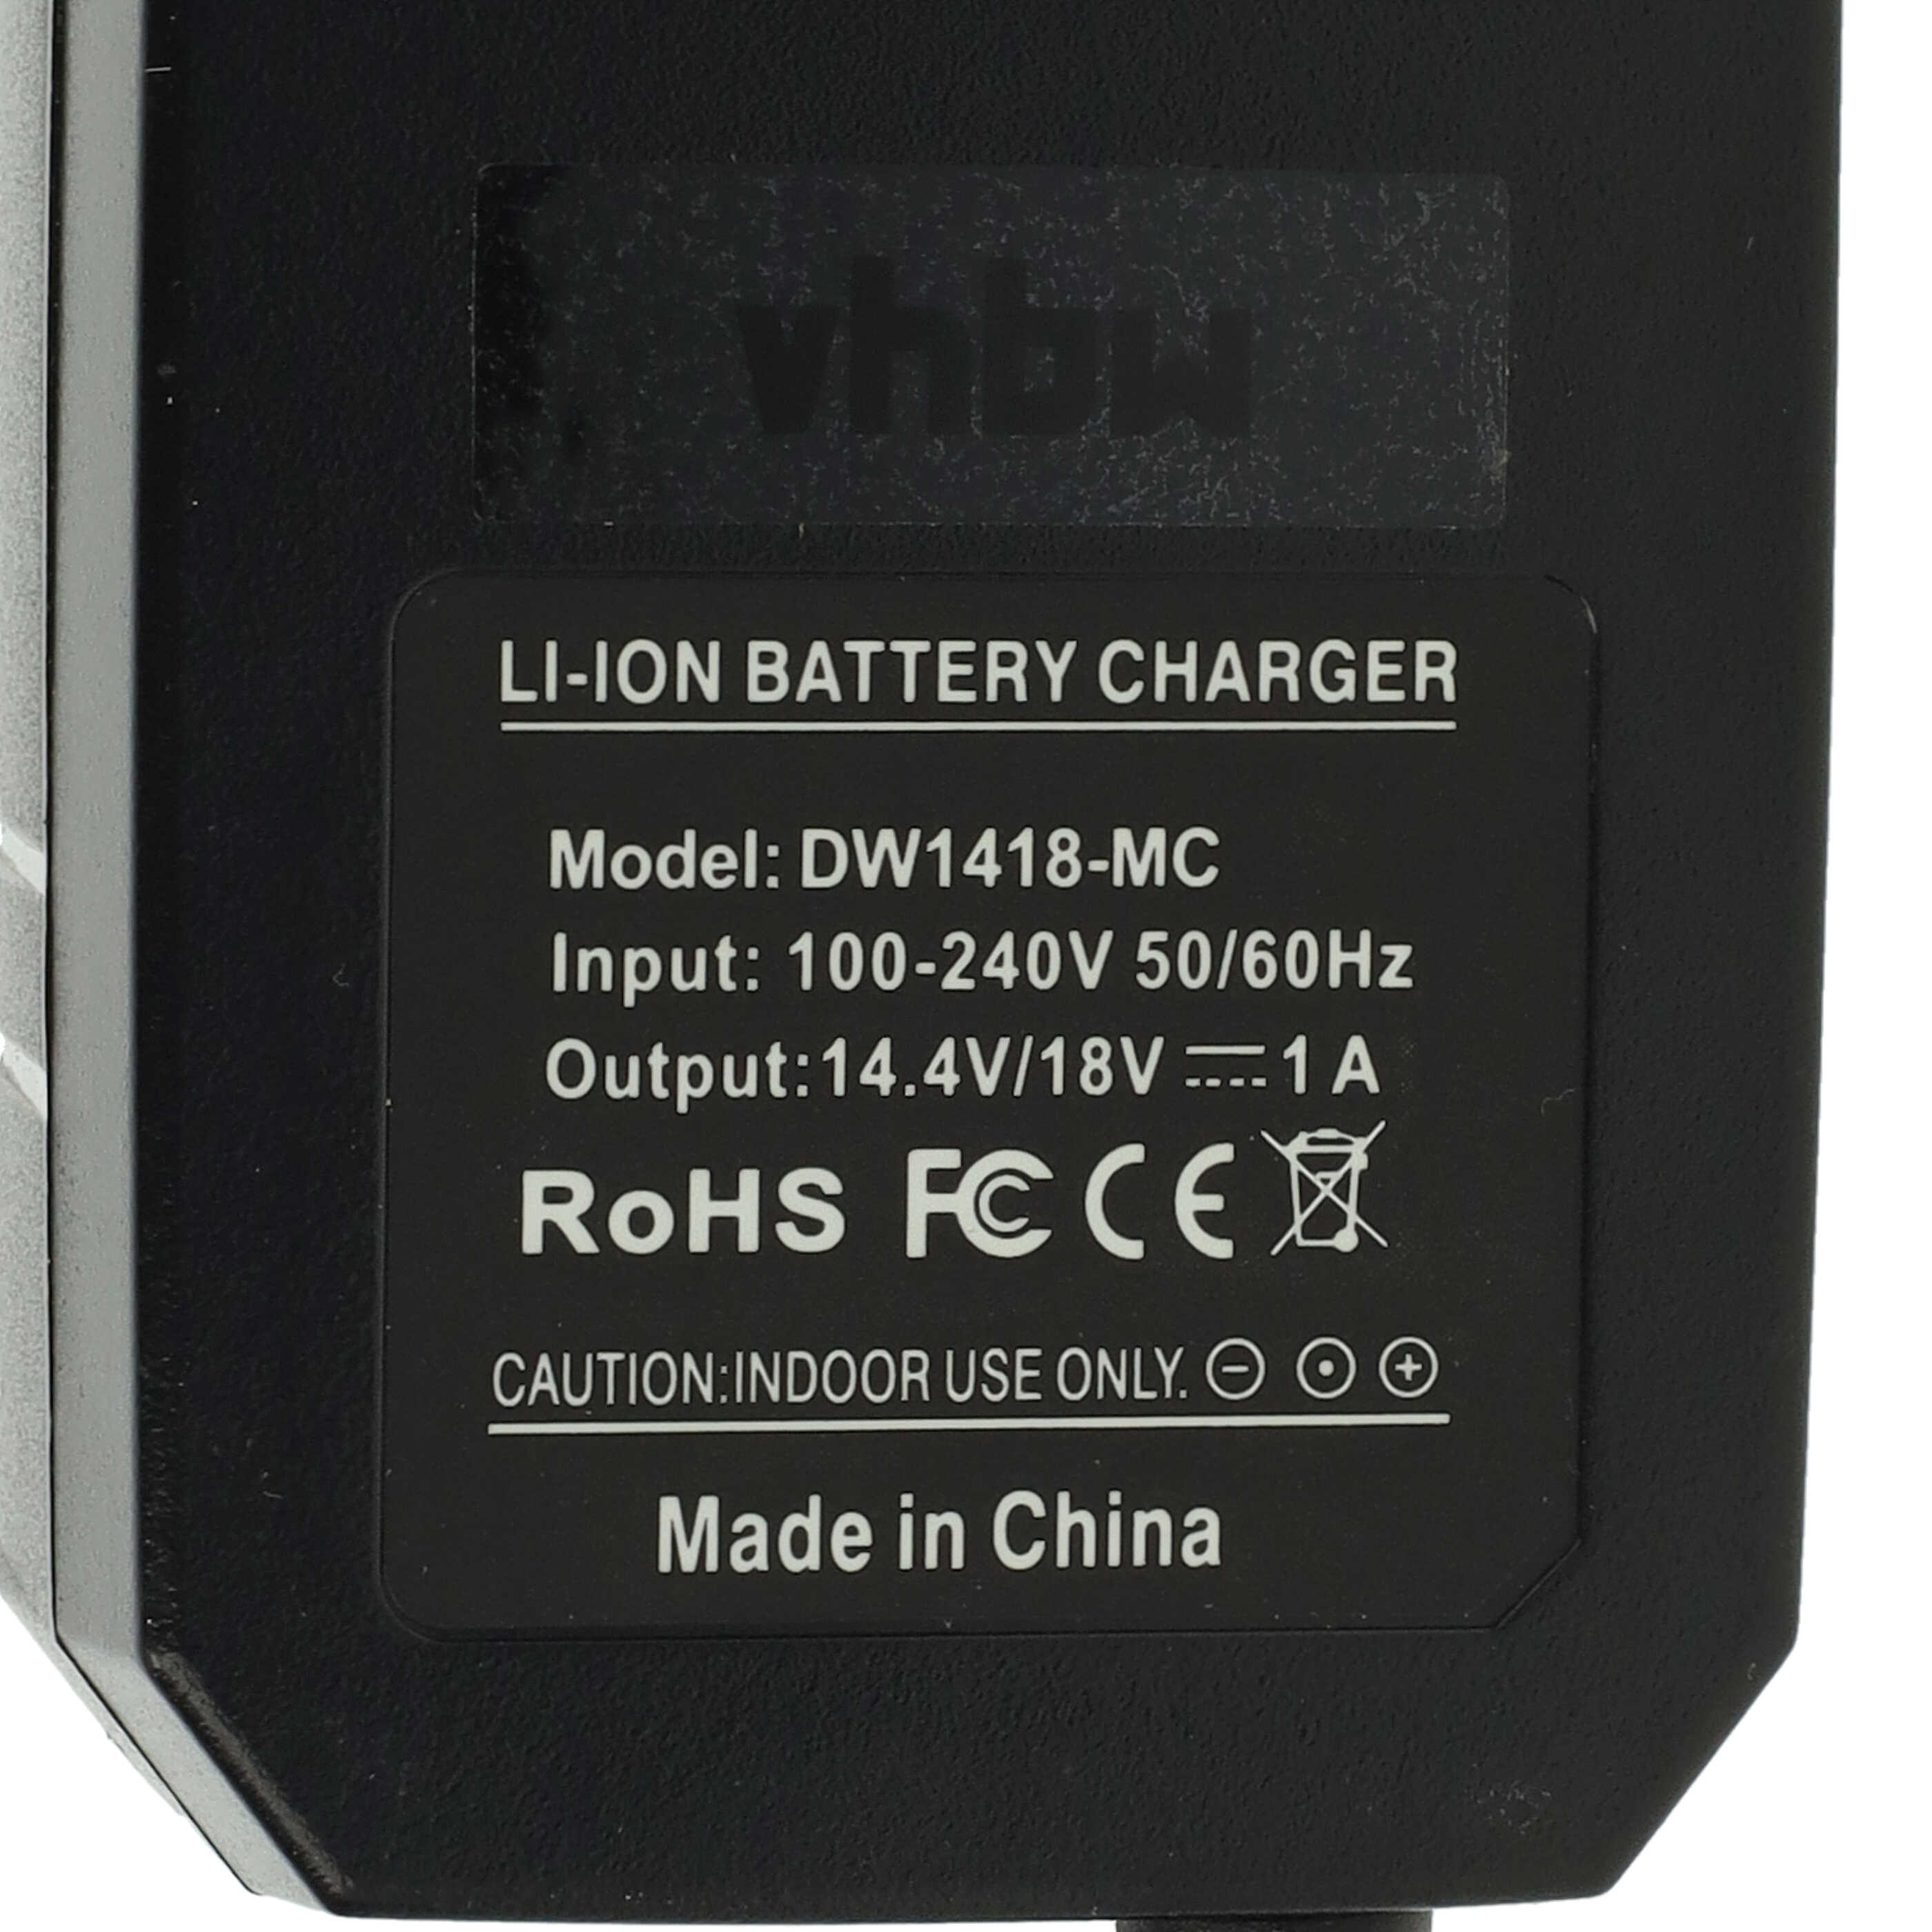 Charger suitable for DCR016 Dewalt, DCR016 Power Tool Batteries etc. Li-Ion 16.8 V